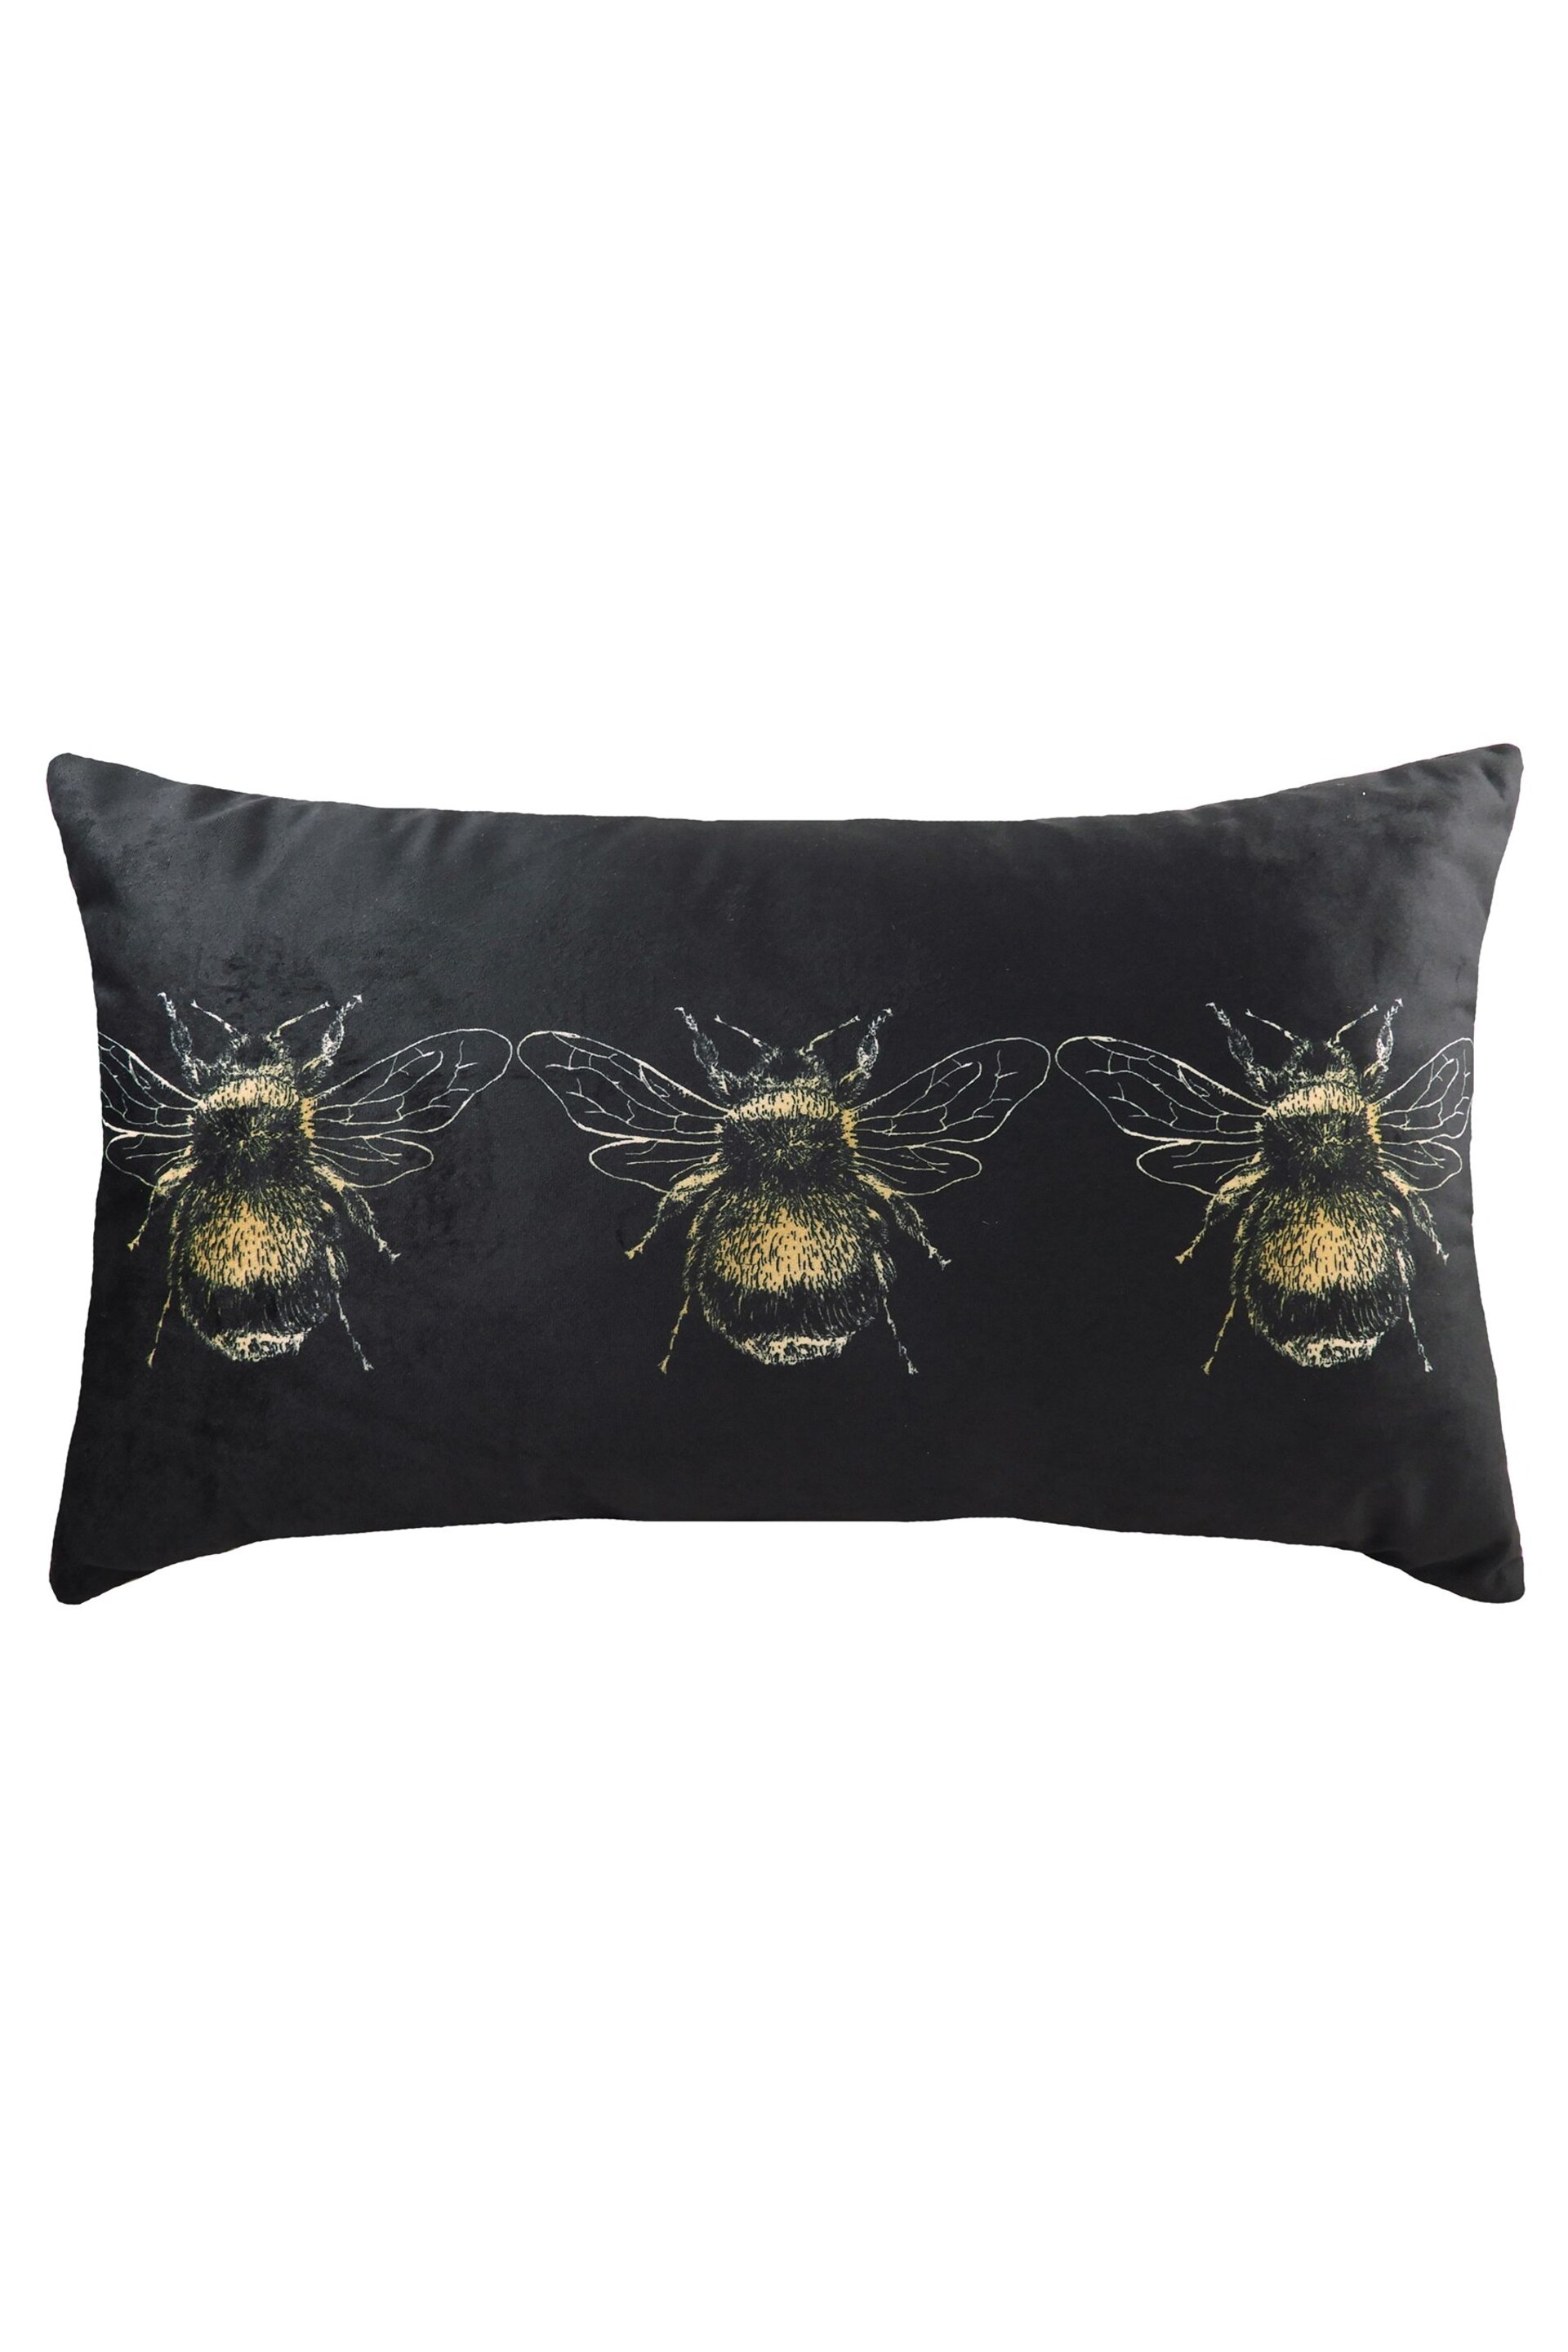 Evans Lichfield Black Gold Bee Velvet Polyester Filled Cushion - Image 1 of 2